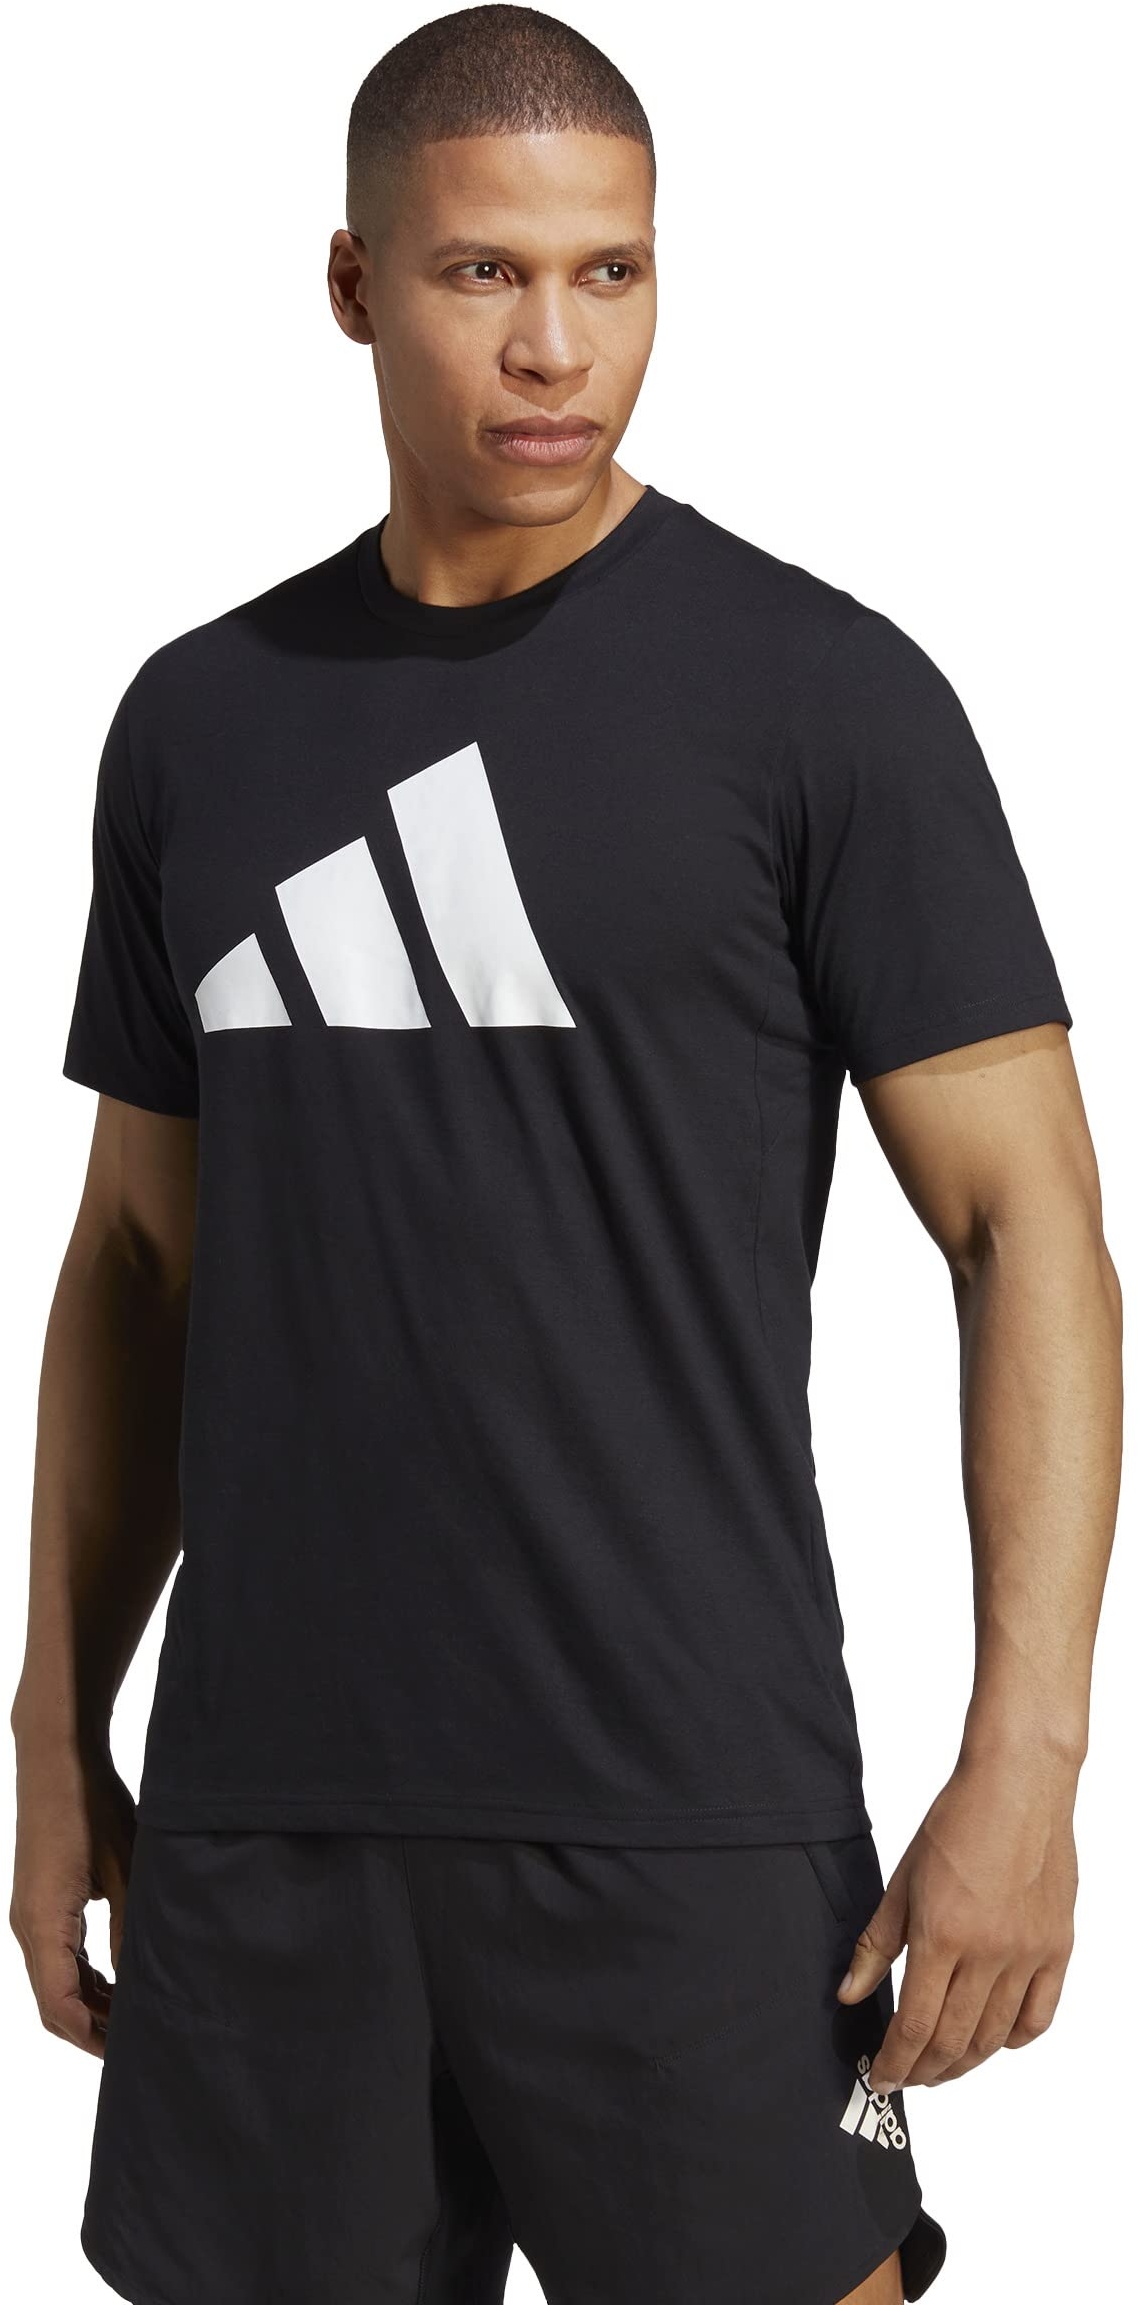 Adidas Herren Tr-es Fr Logo T Tshirt, schwarz/weiß, XL